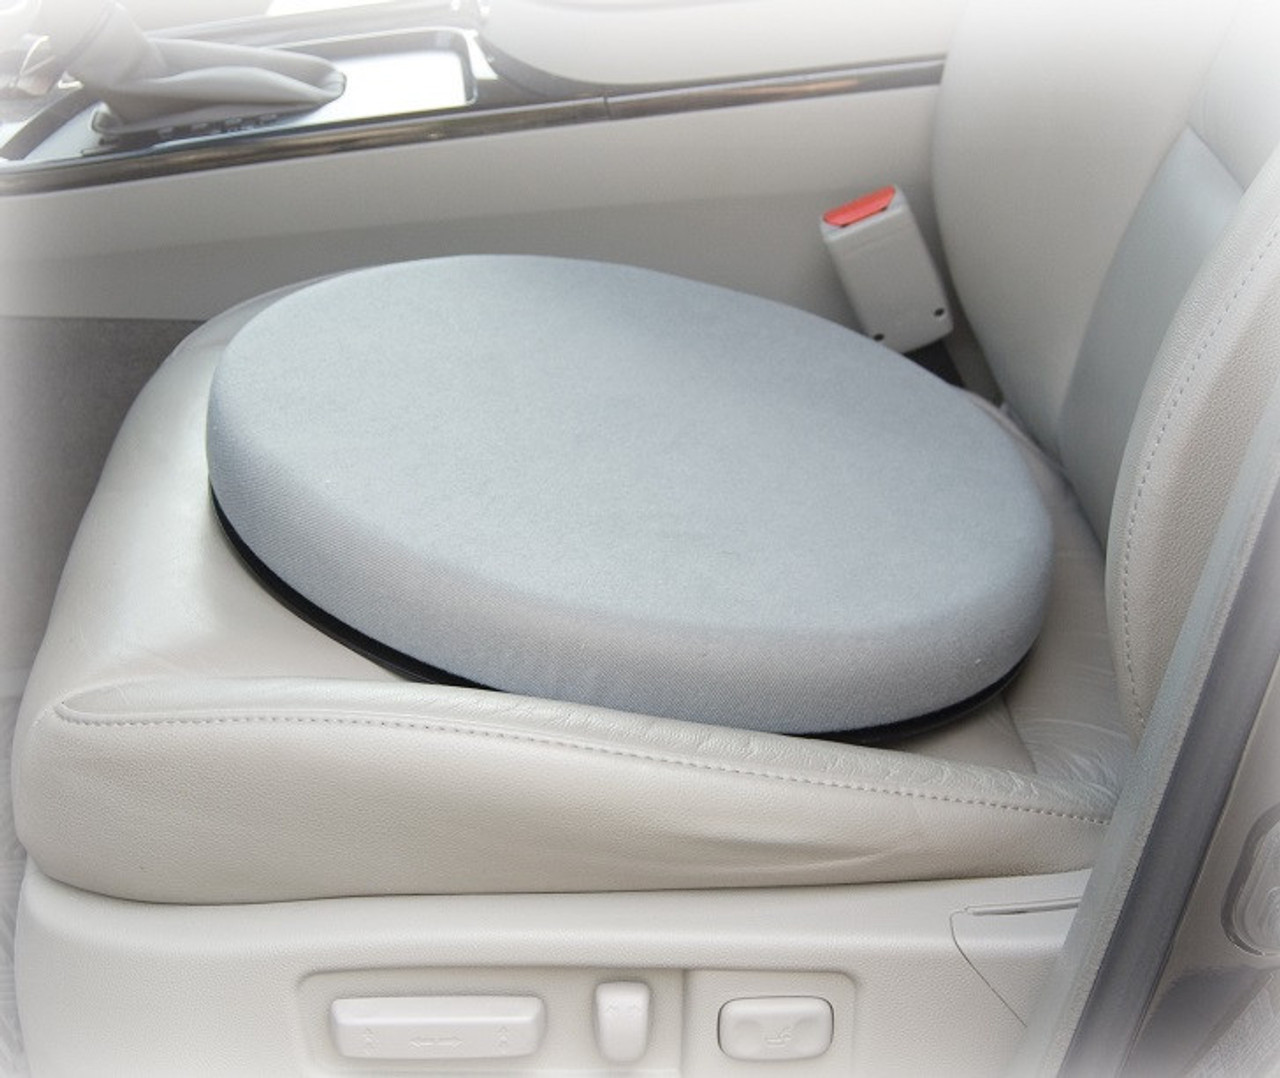 Padded Swivel Seat Cushion RTLAGF-300 by Drive